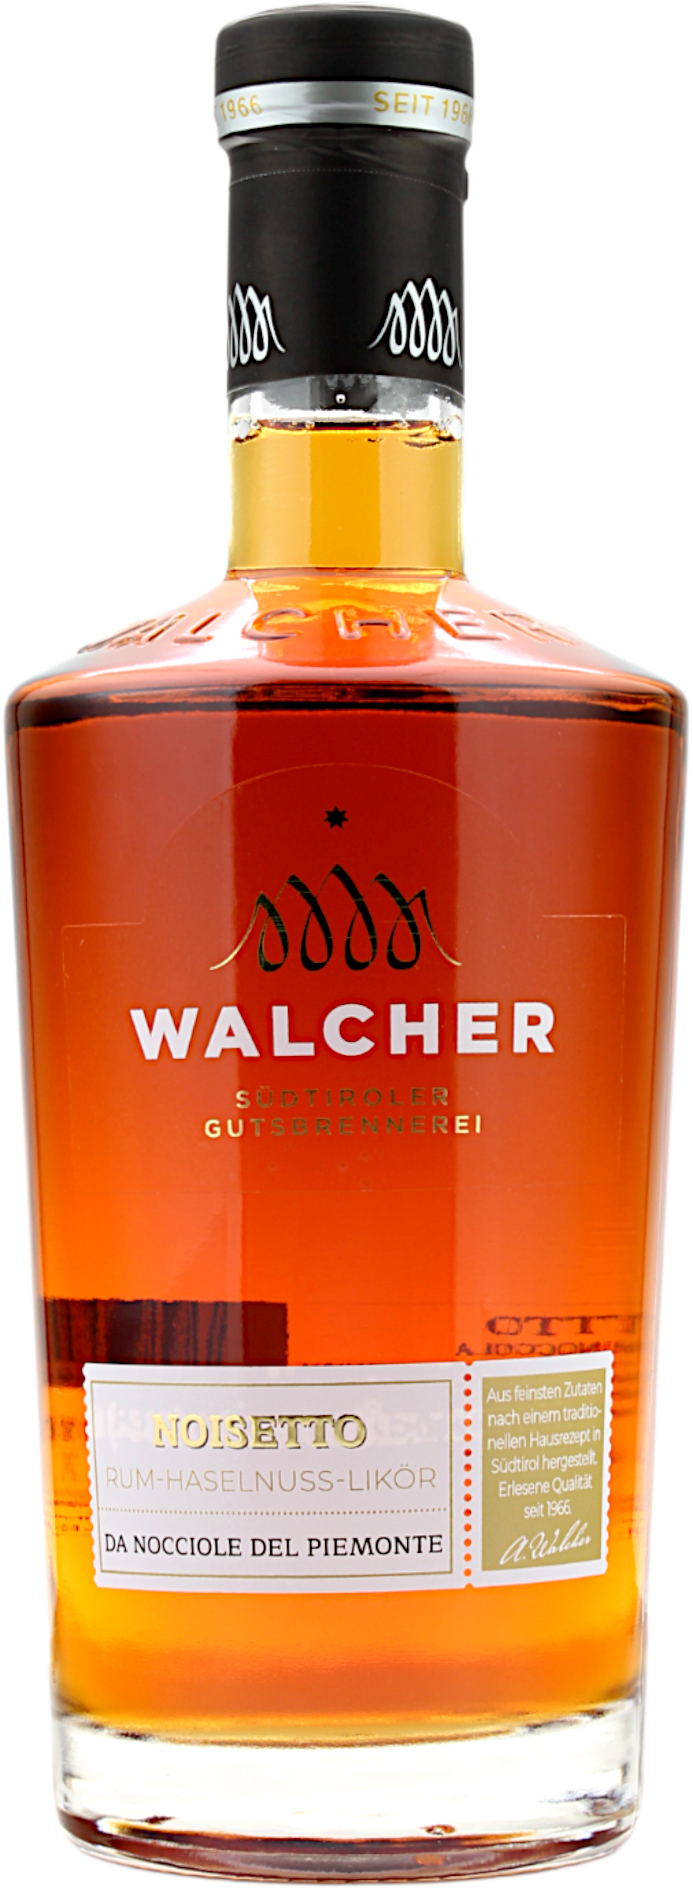 Walcher Noisetto 21.0% 0,7l